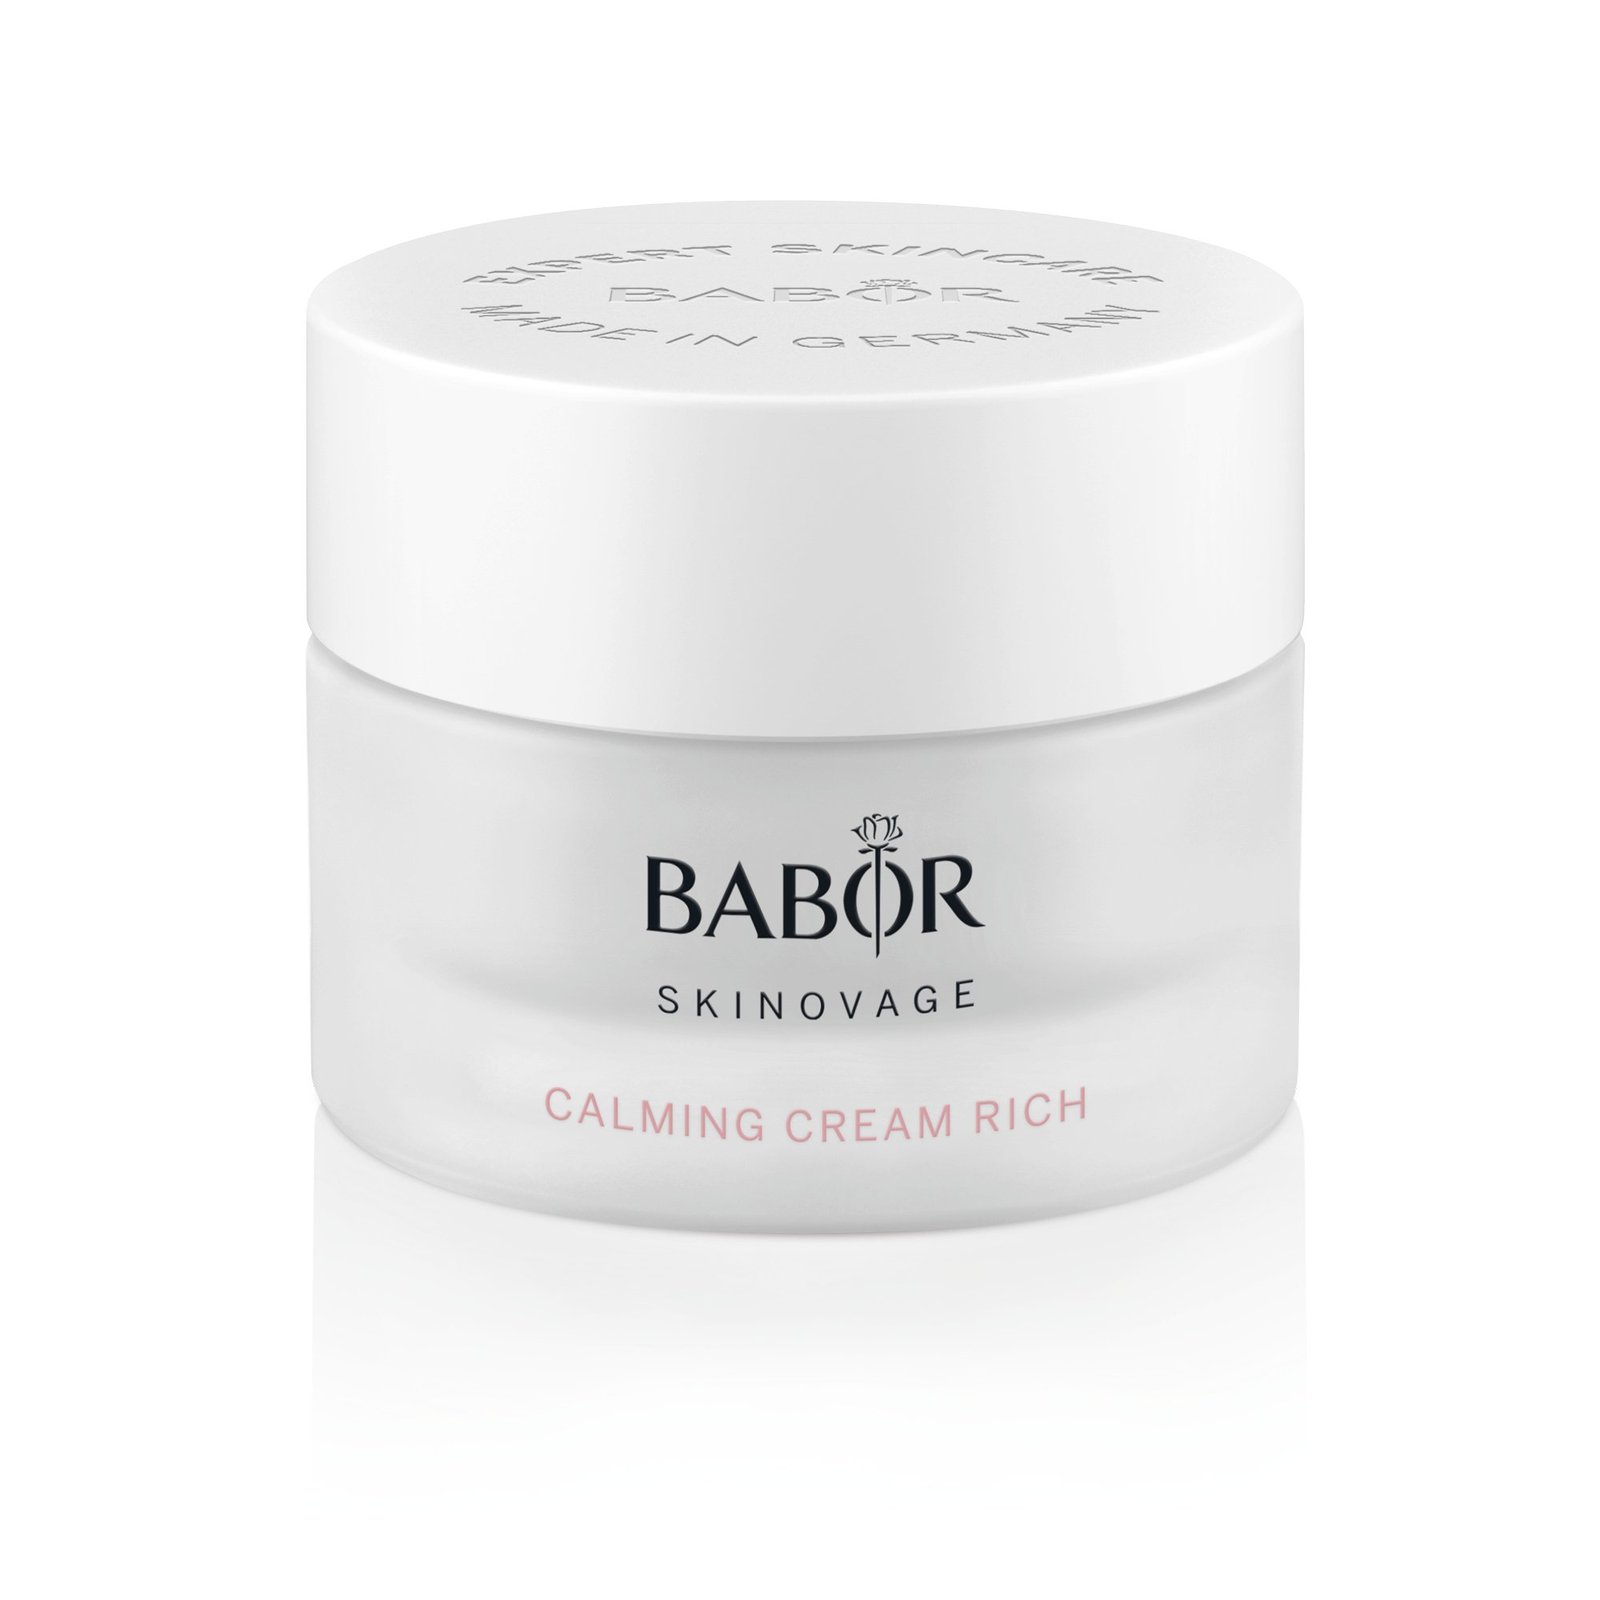 BABOR Skinovage Calming Cream rich 50ml